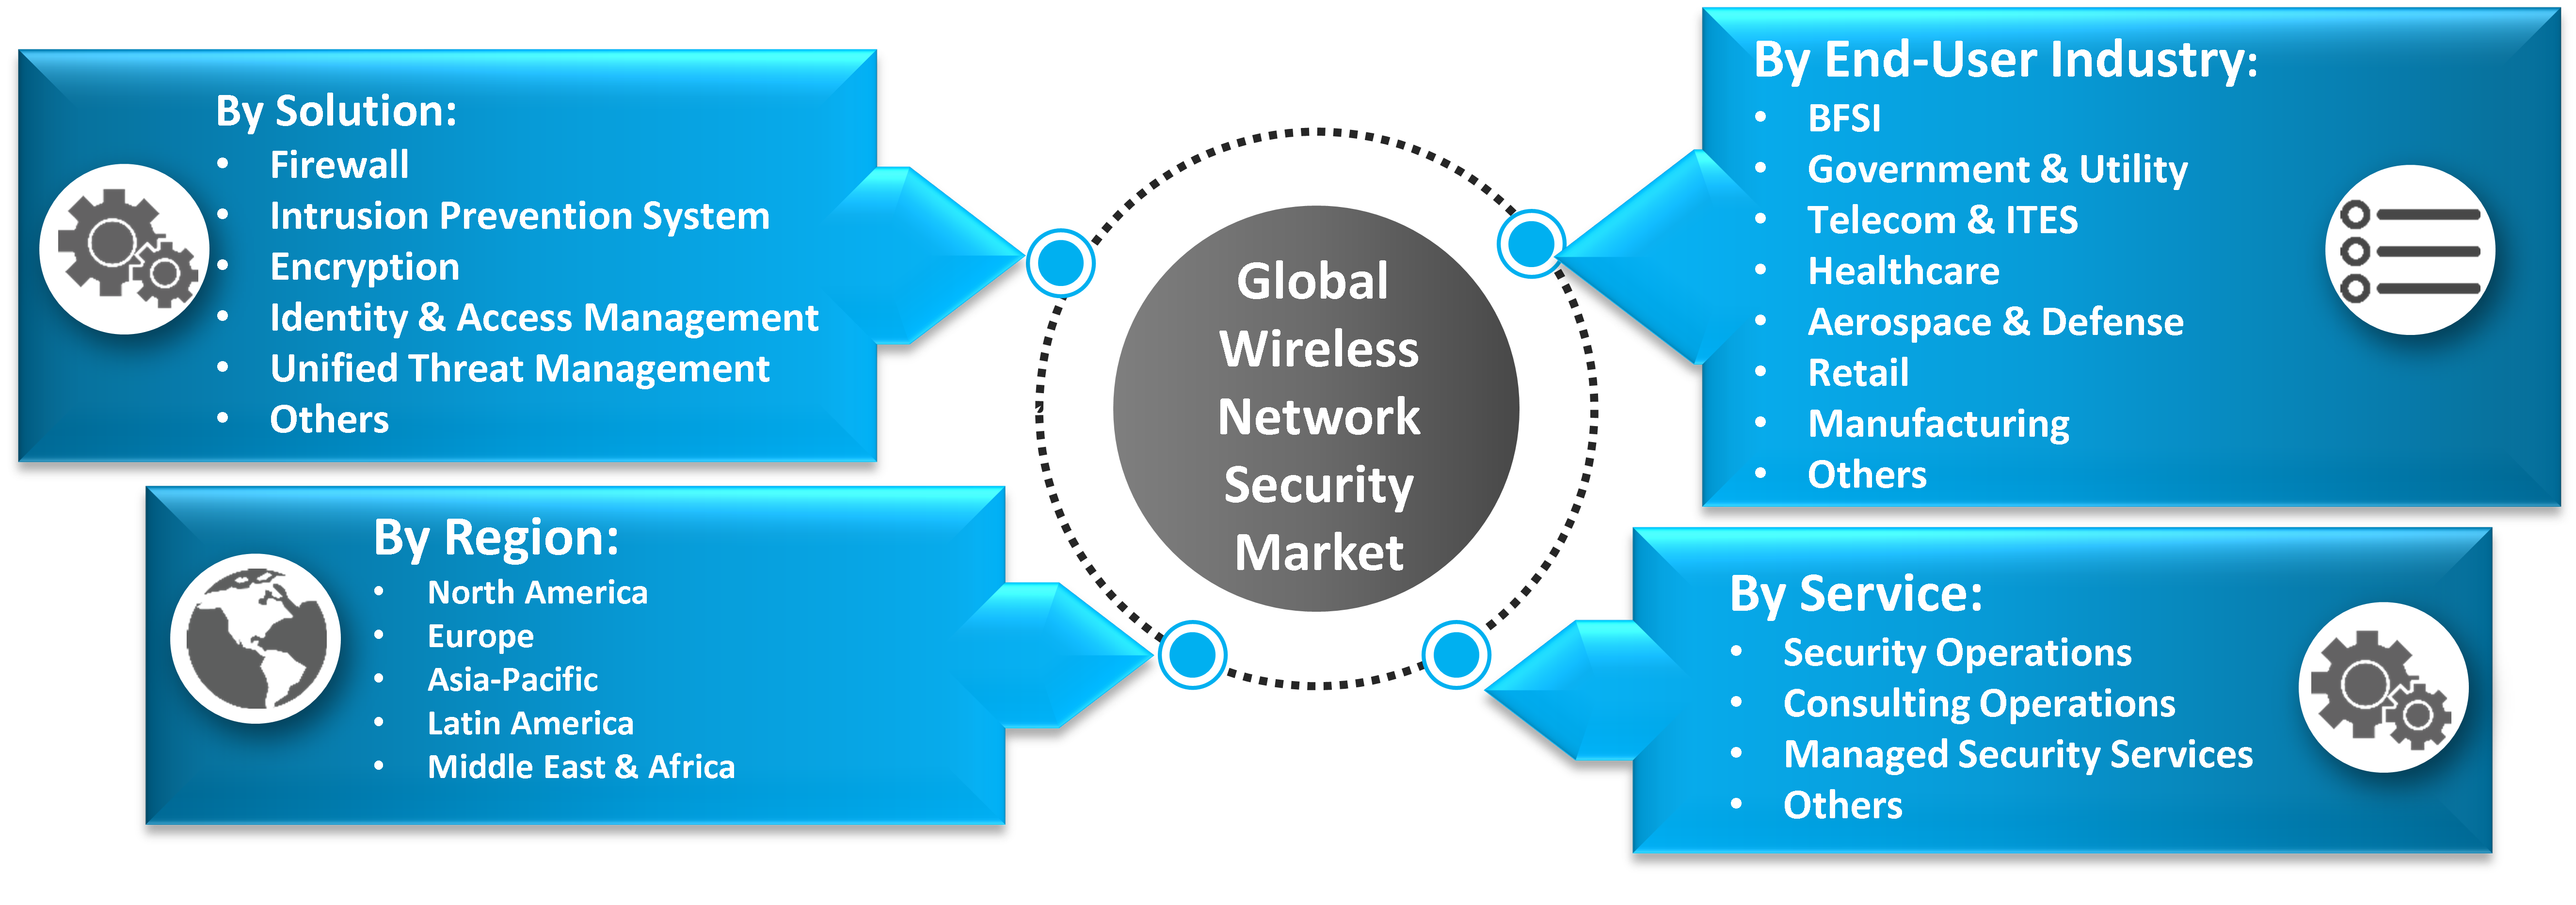 Global Wireless Network Security Market Segments